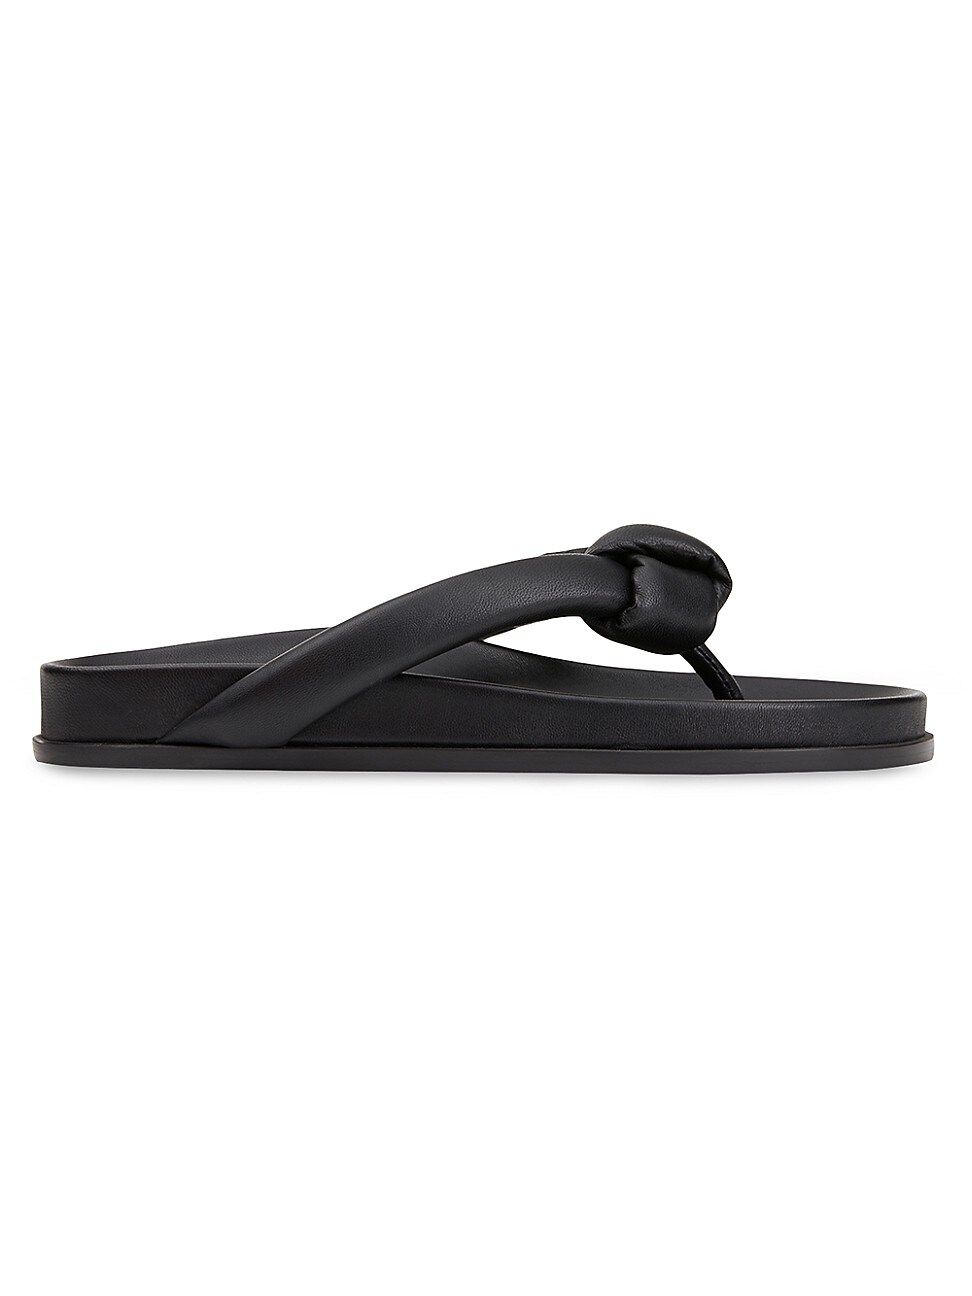 Women's Bristol Leather Thong Sandals - Black - Size 7 | Saks Fifth Avenue